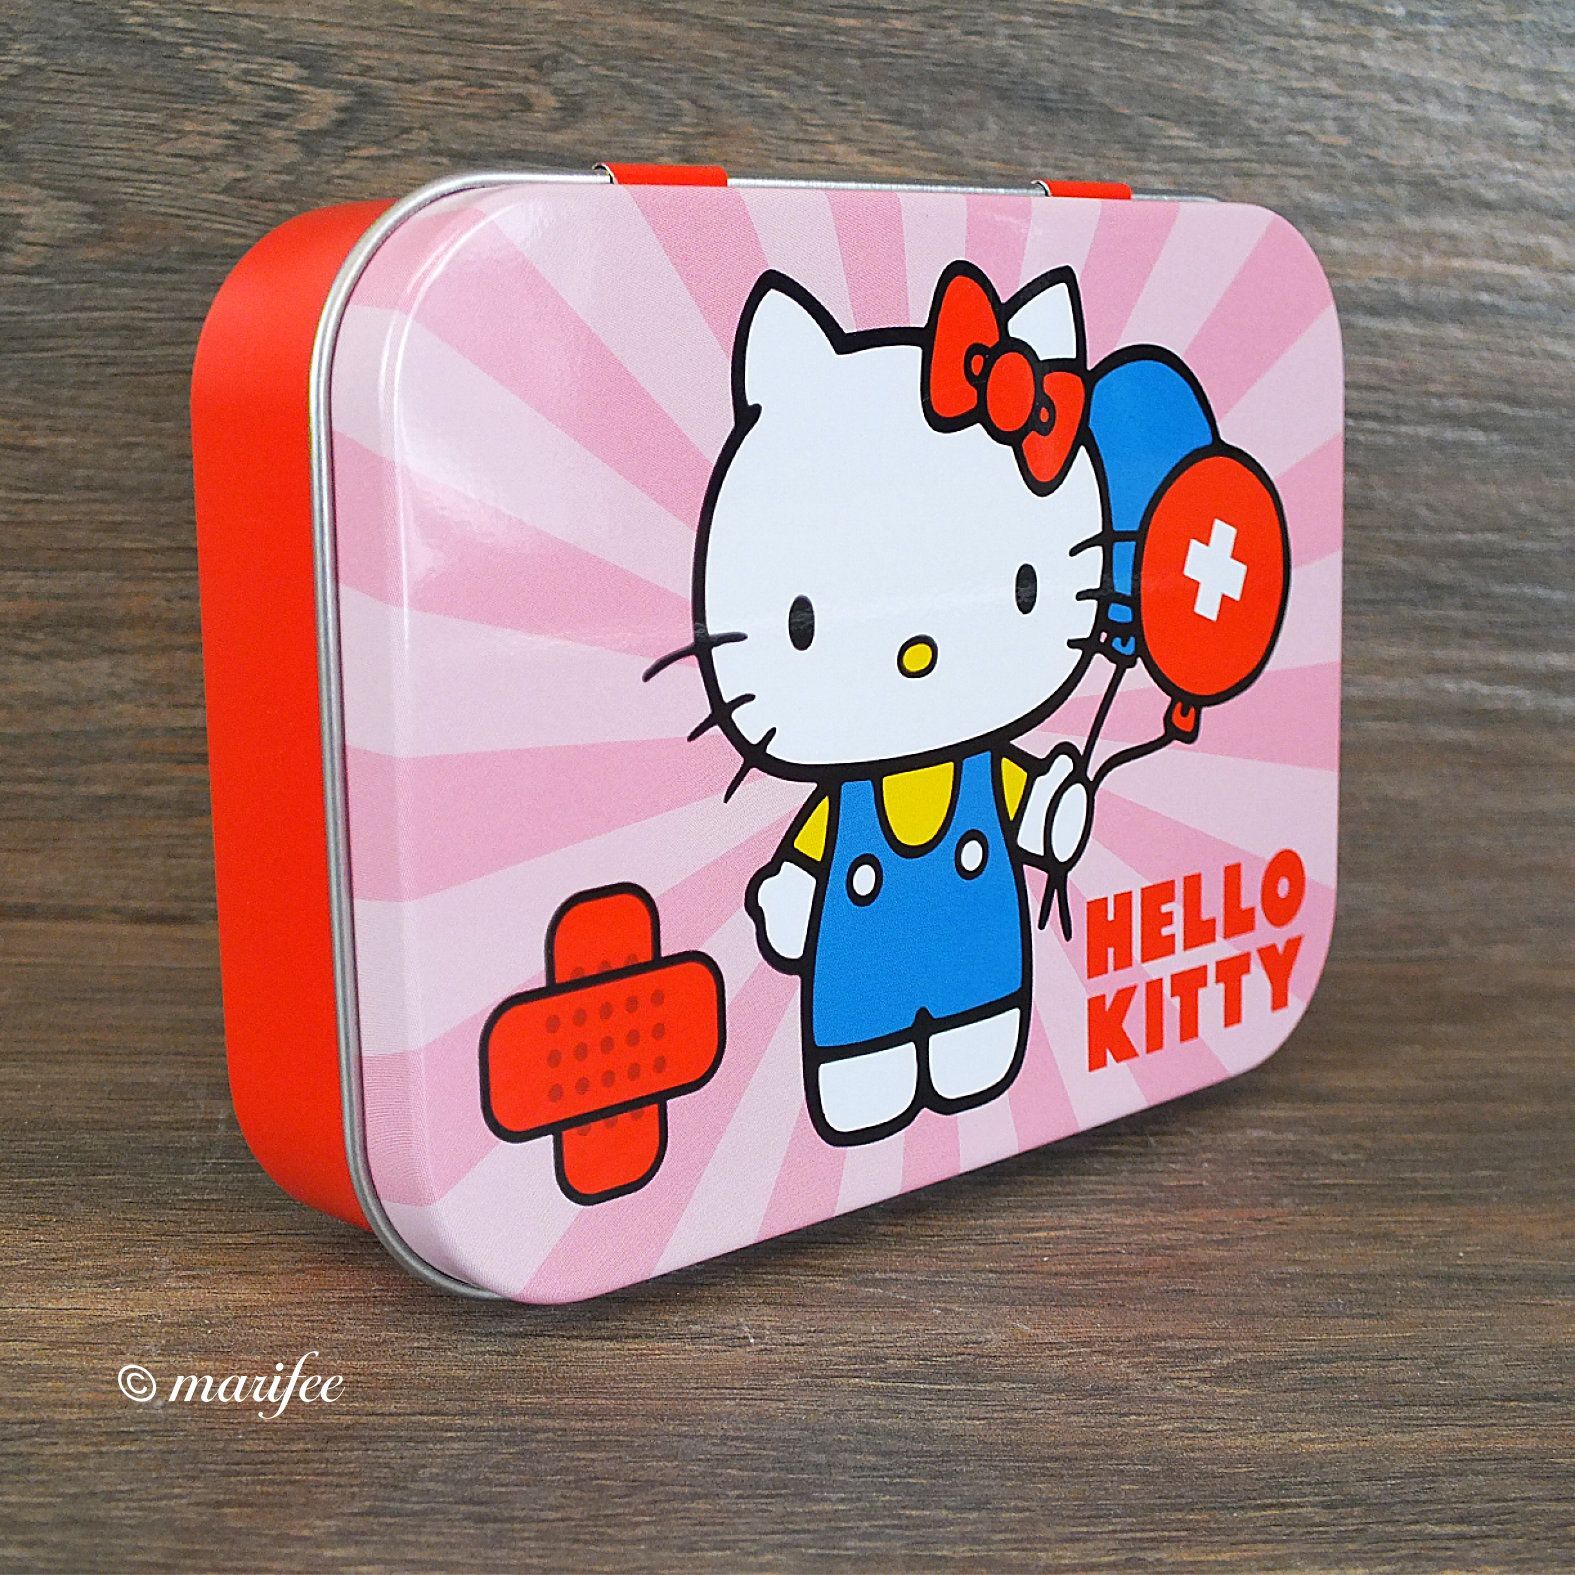 Pflaster-Box Hello Kitty, 24-teilig in hochwertiger Metalldose